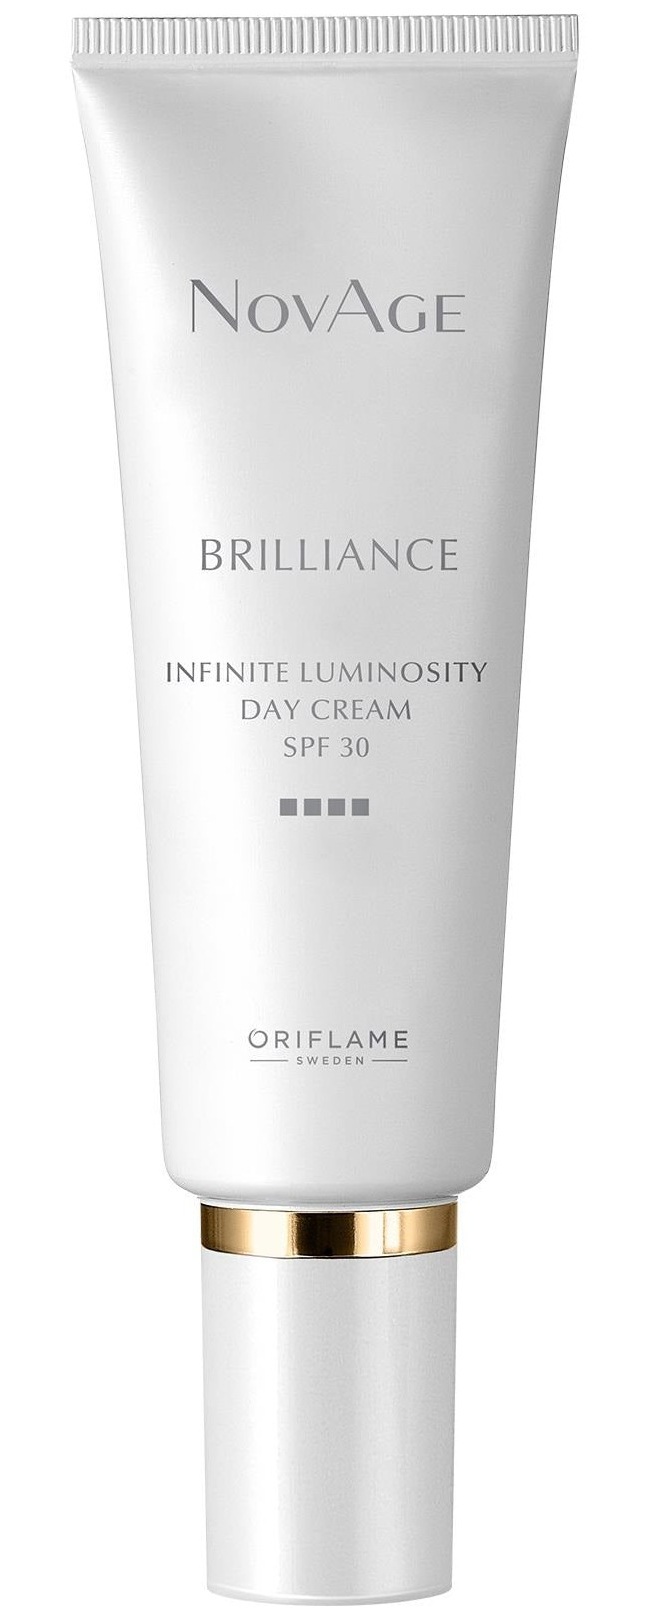 Oriflame Novage Brilliance Infinite Luminosity Day Cream SPF 30